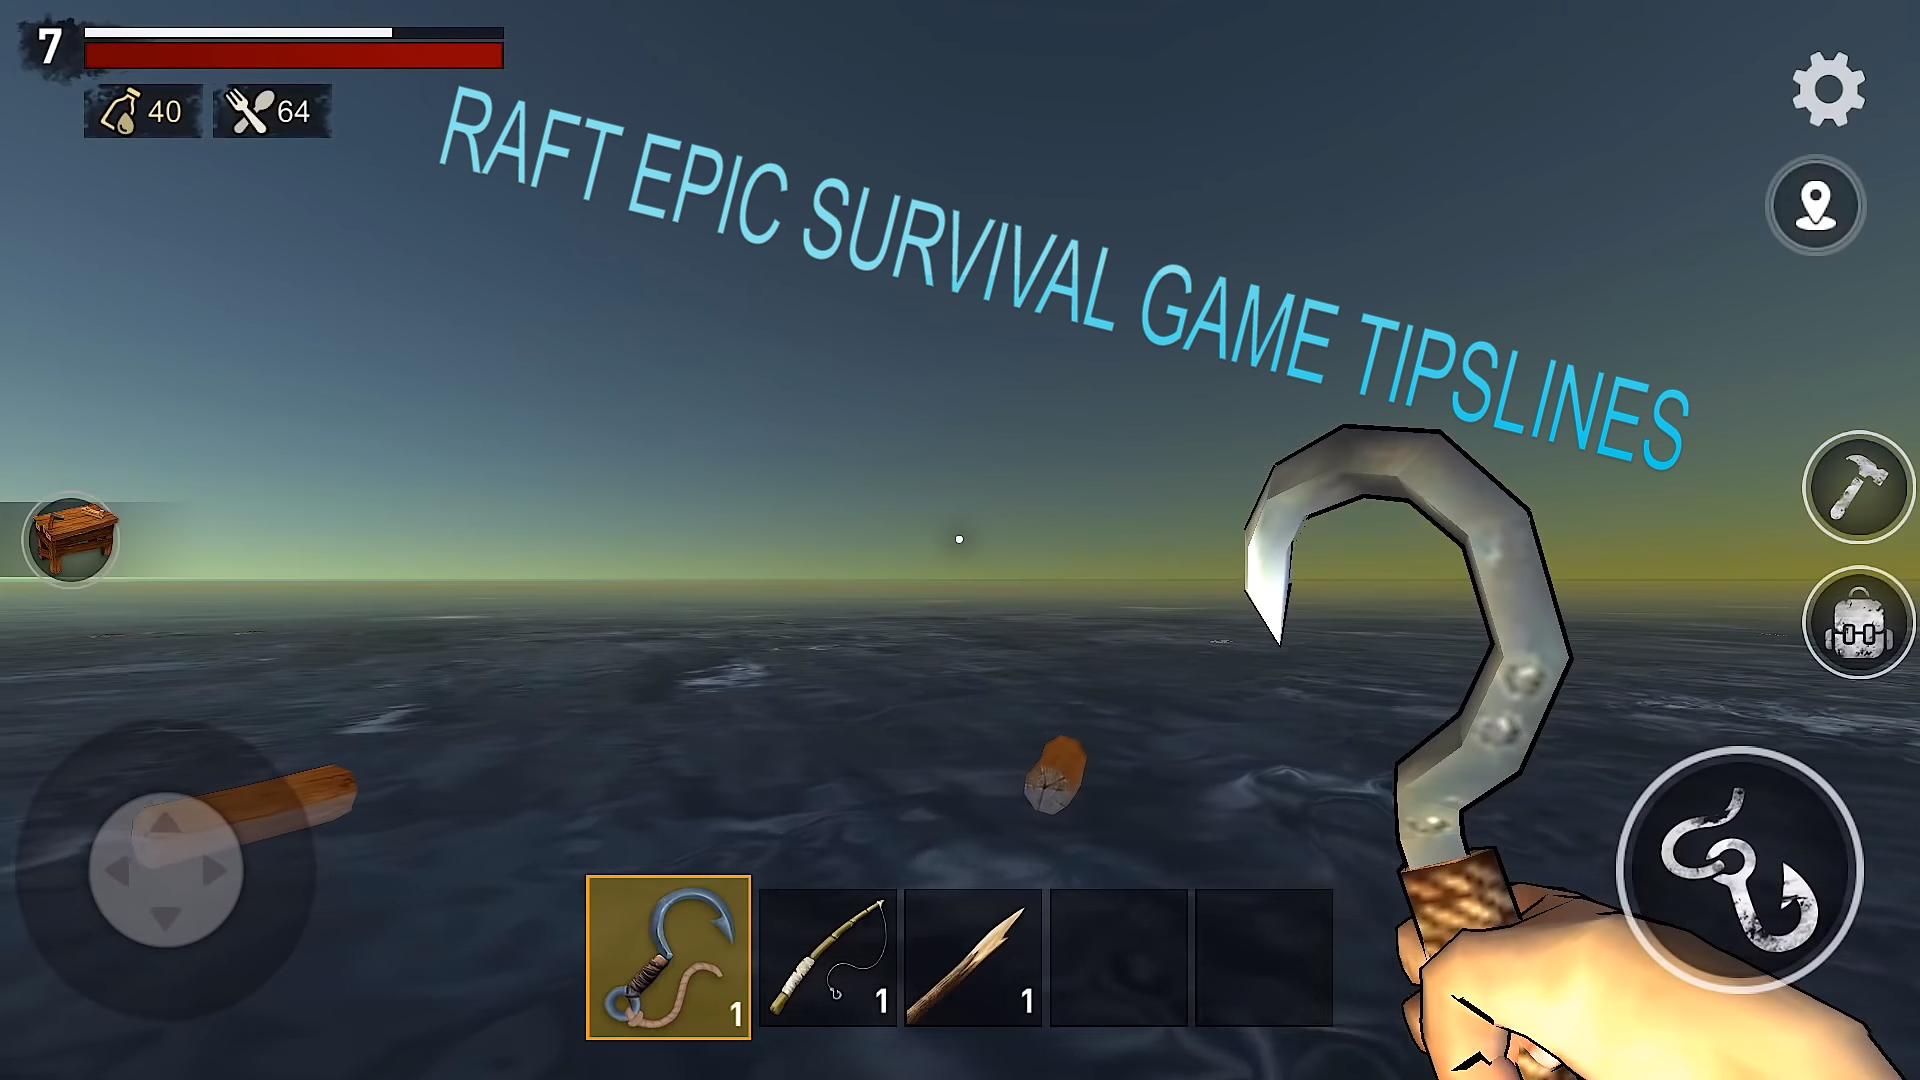 Raft Epic Survival Game Original Tipslines For Android Apk Download